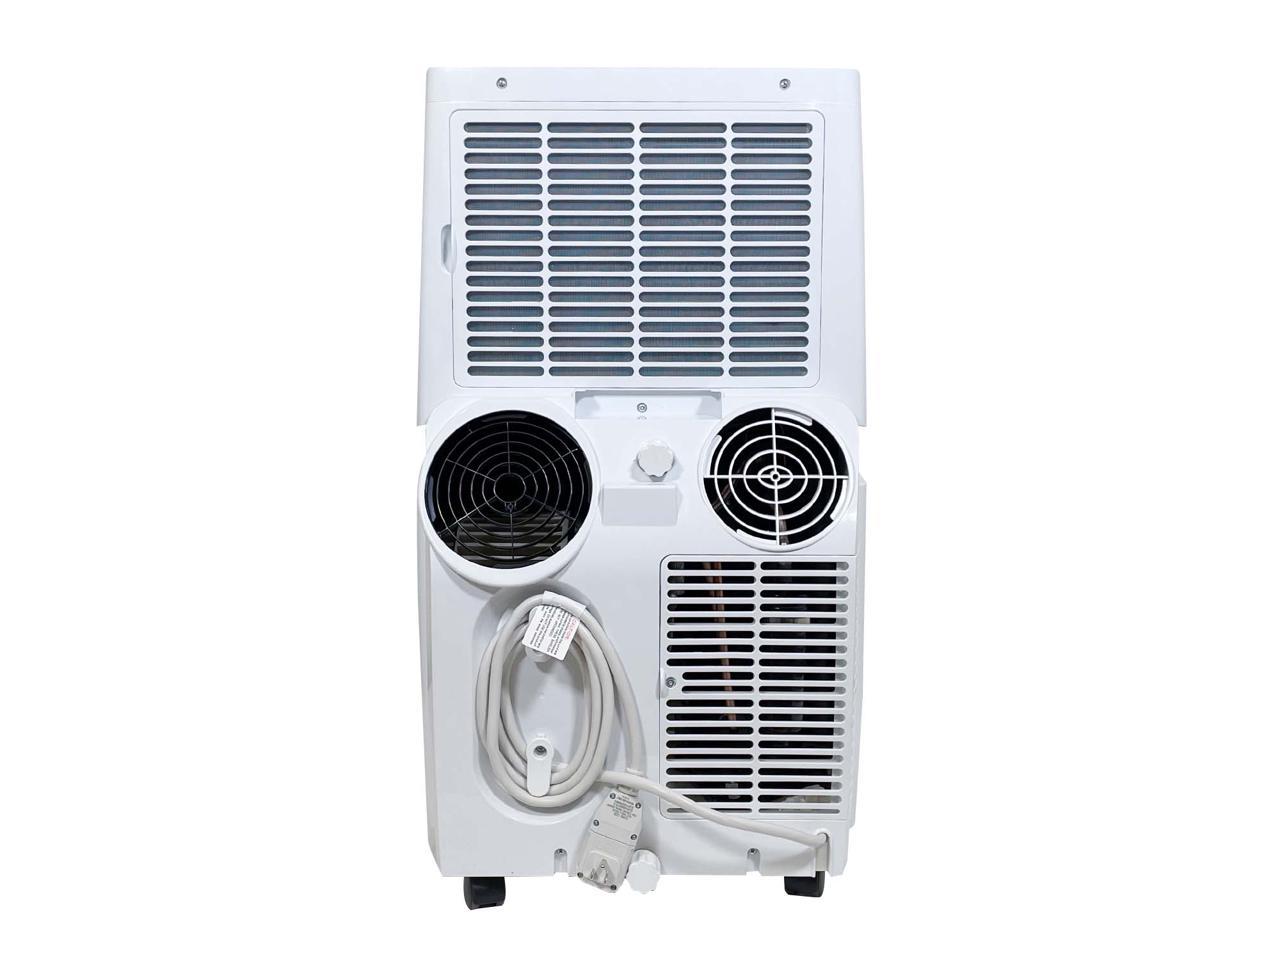 Soleus Air 14,000 BTU/10,000 BTU DOE Portable Air Conditioner with Heat Mode, Quiet Mode, and Dehumidifier Mode